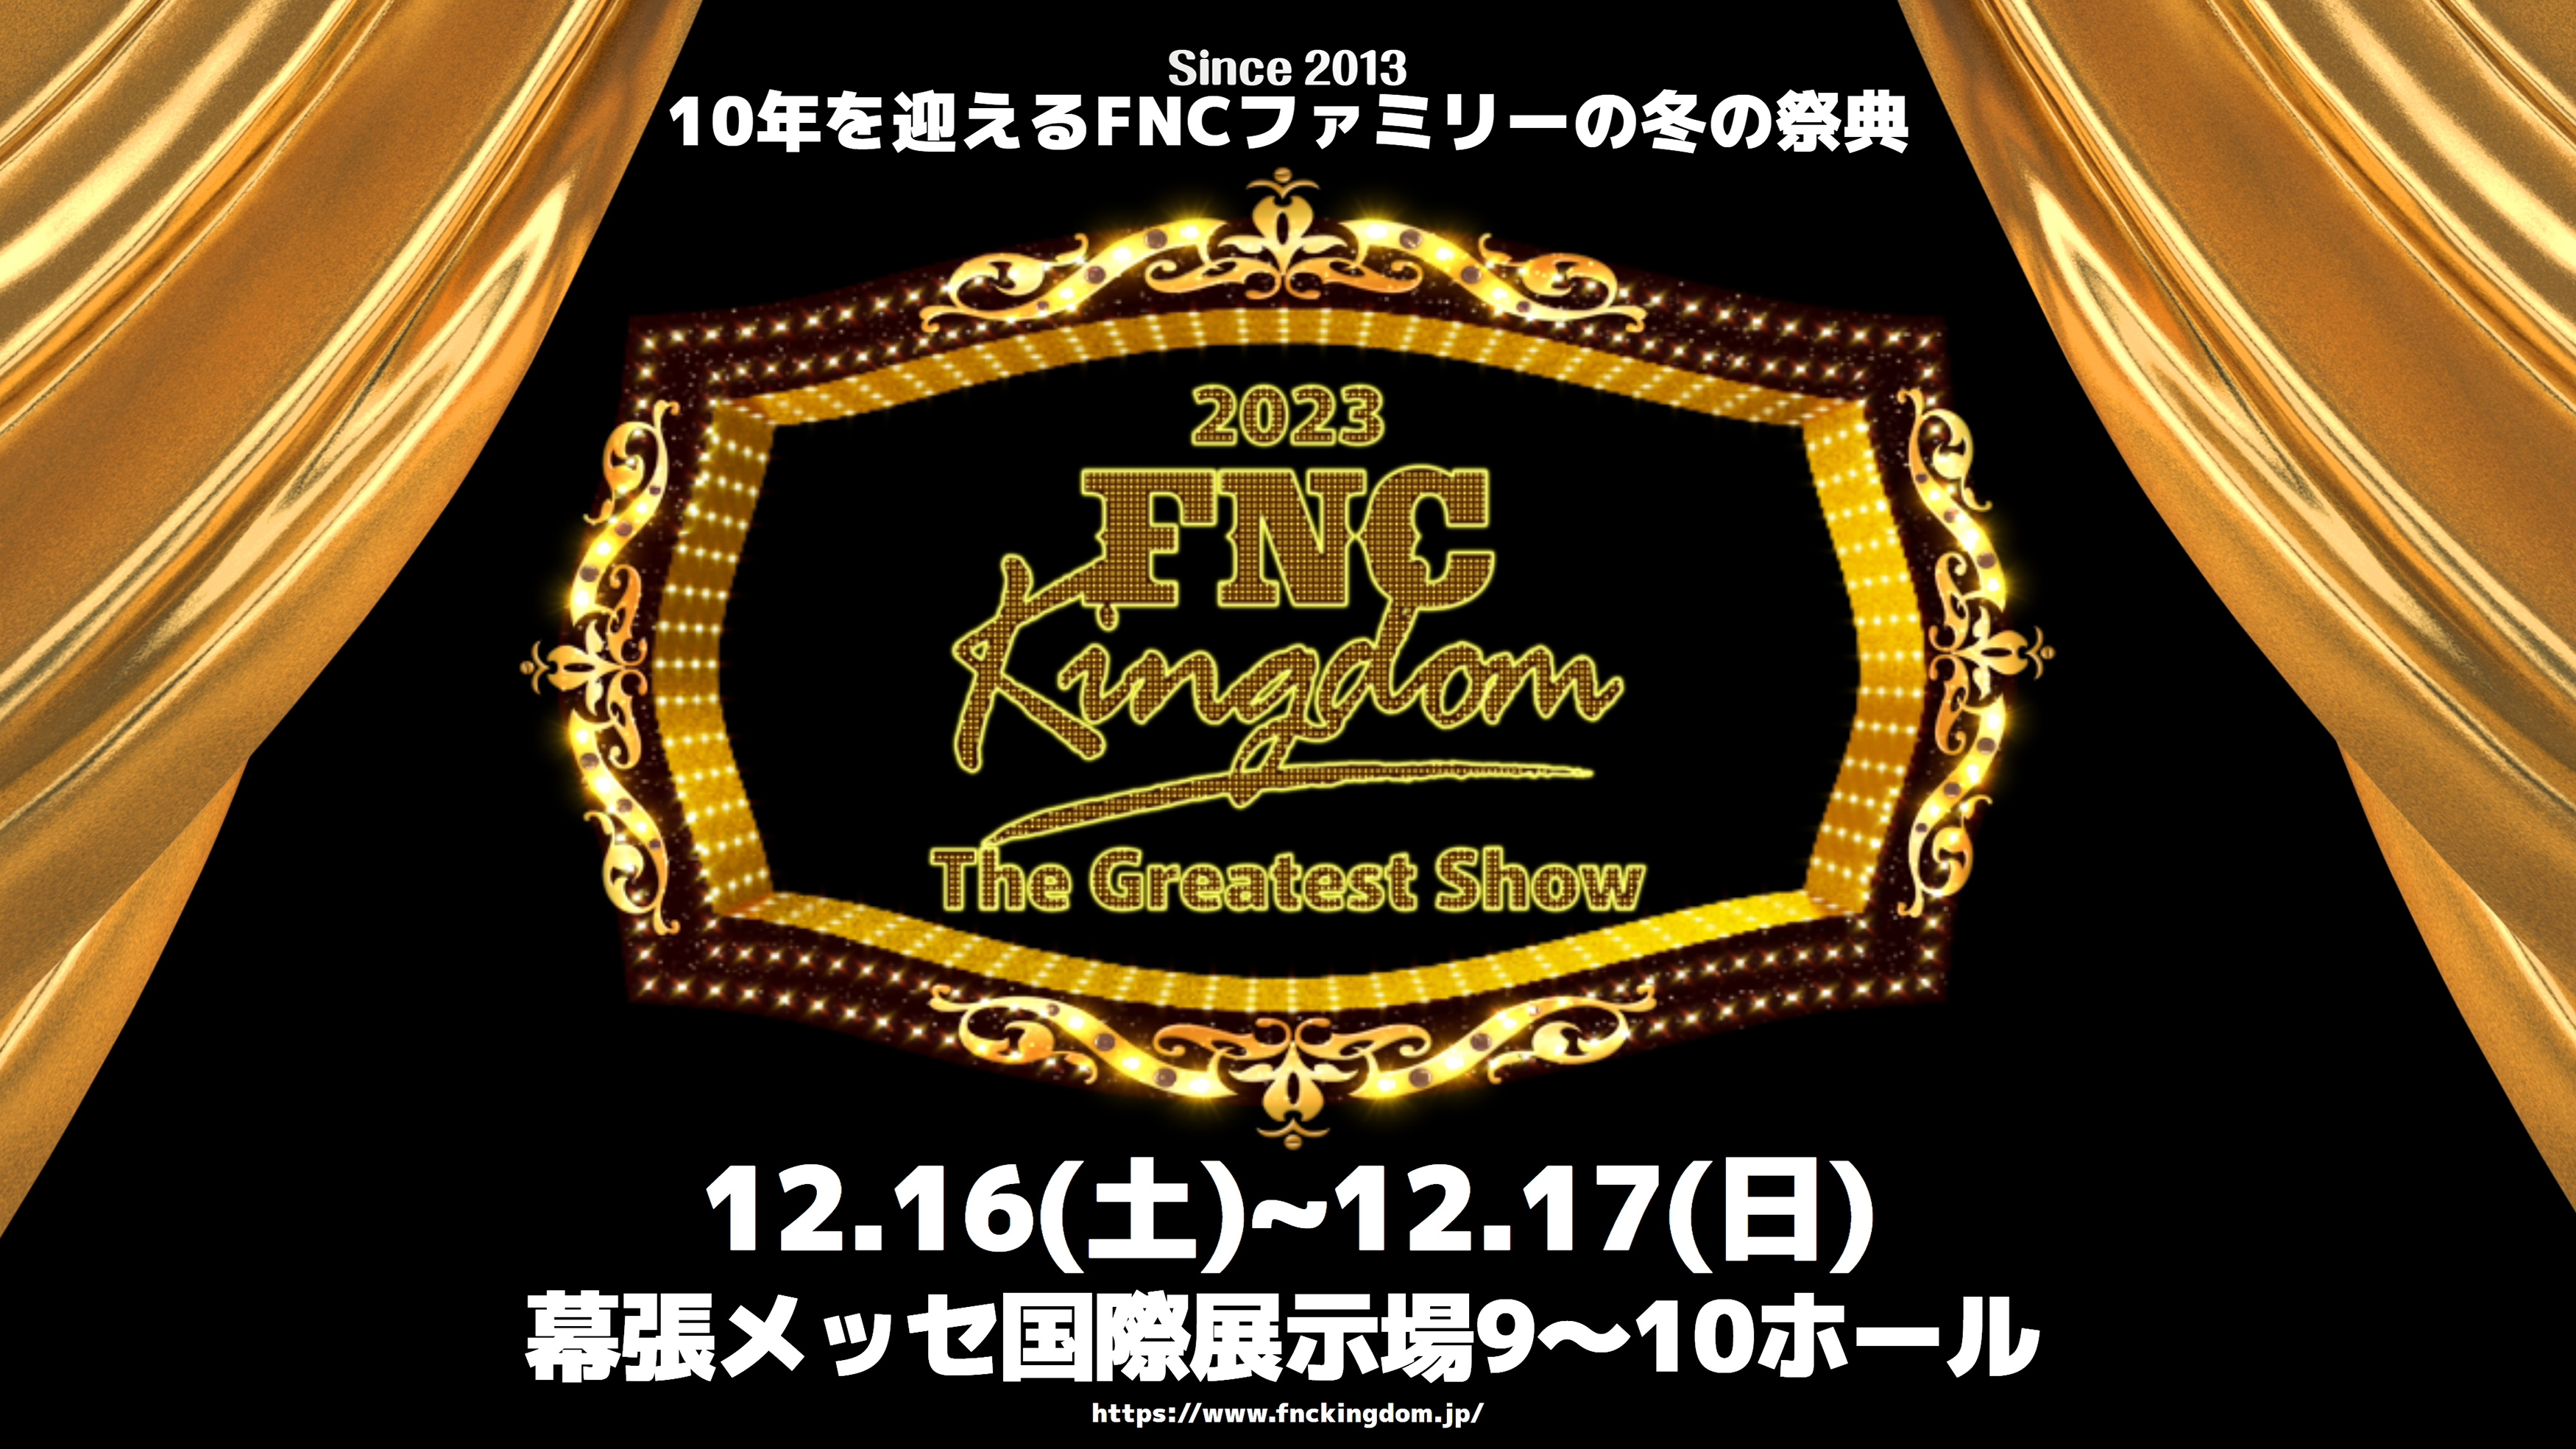 2023 FNC KINGDOM - The Greatest Show -